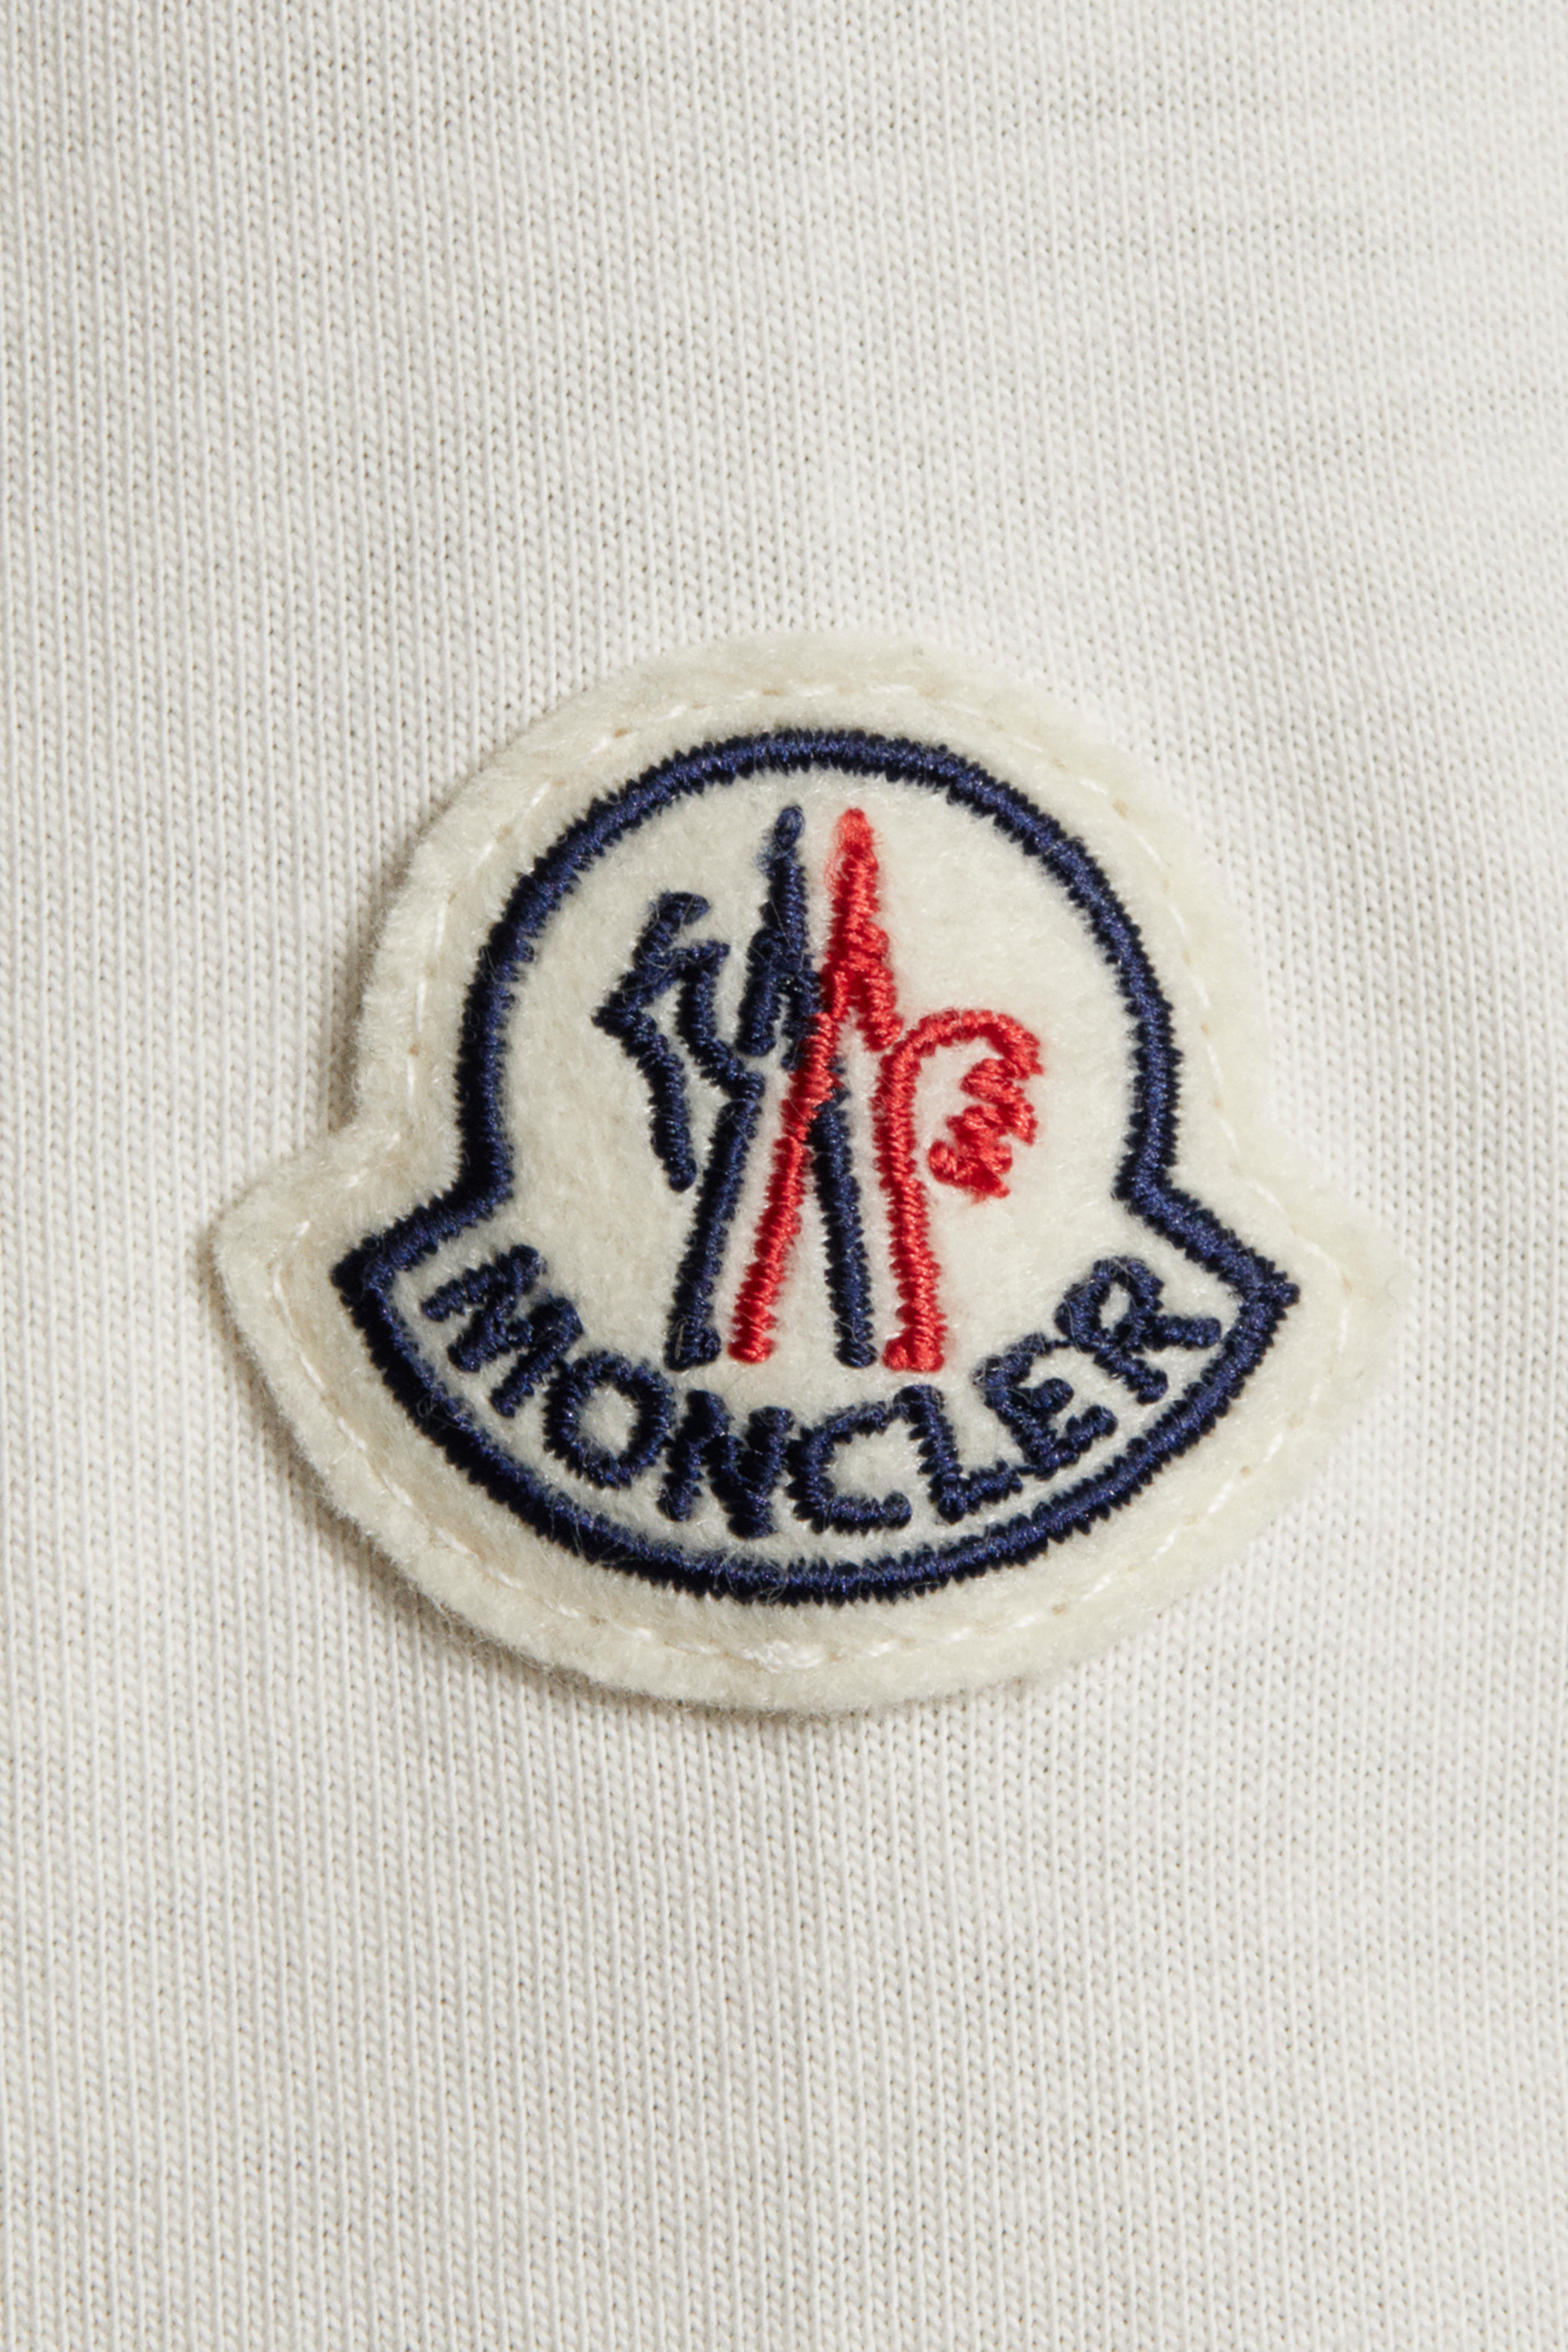 moncler logo Off 52% - www.corpel.com.br